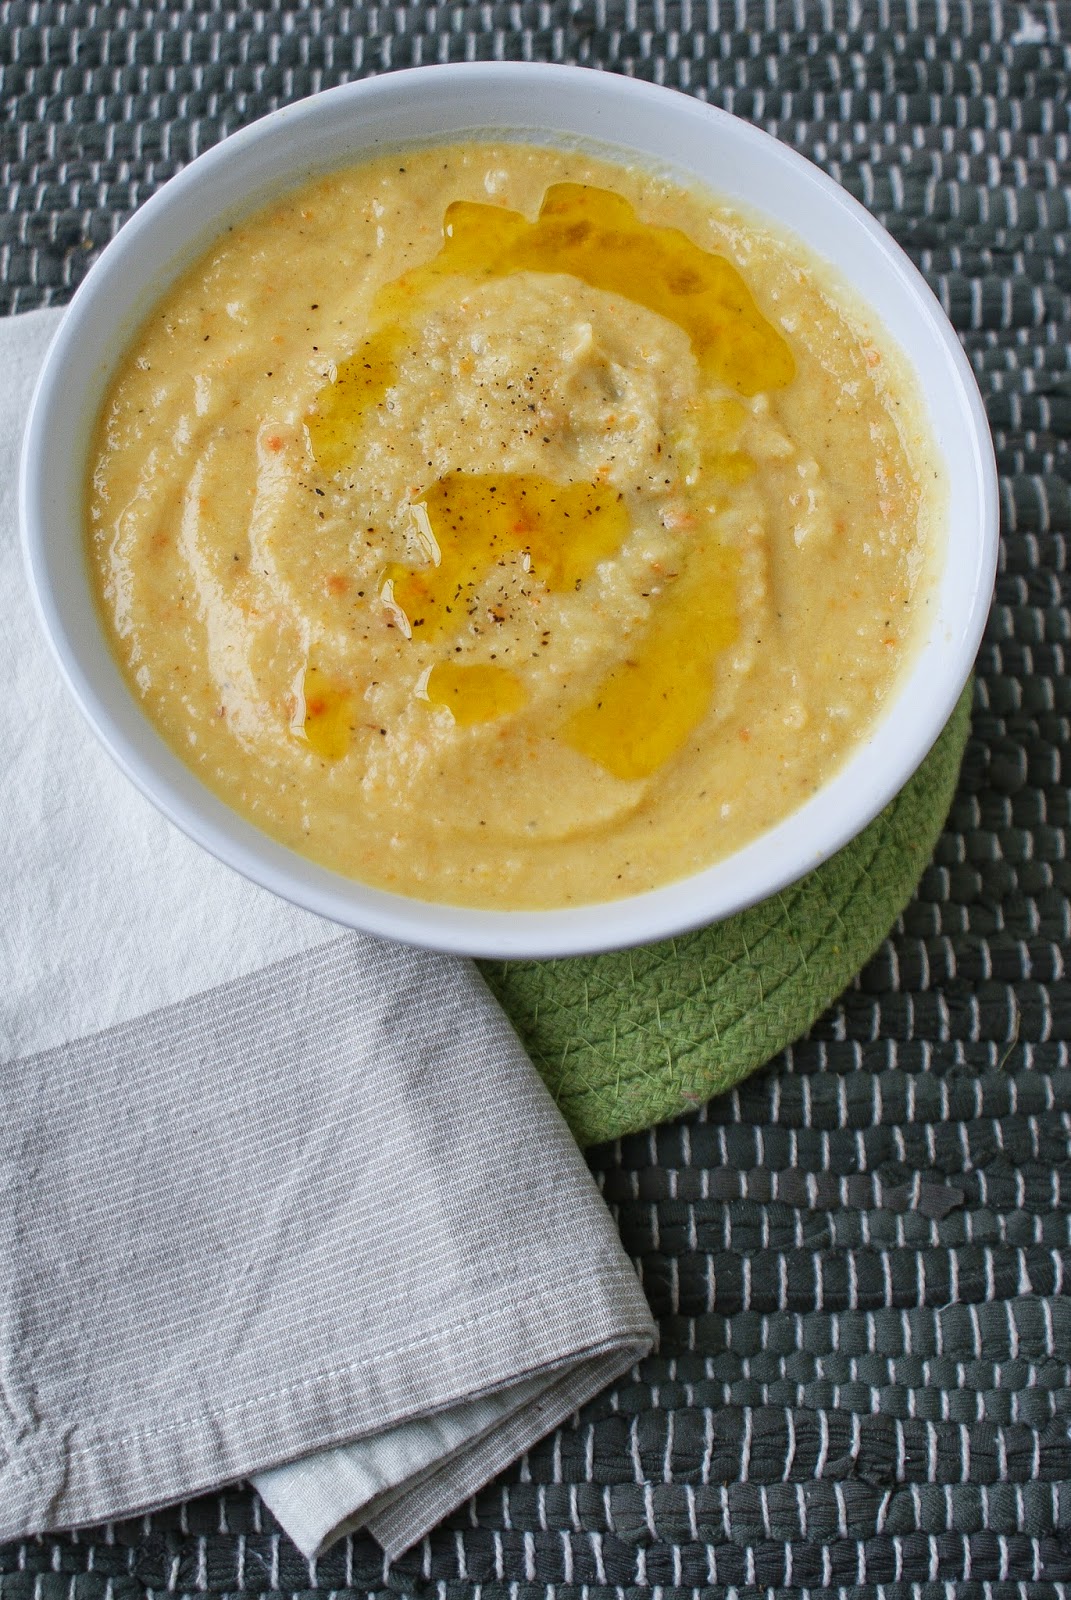 Easy Creamy Cauliflower Soup | PiperCooks